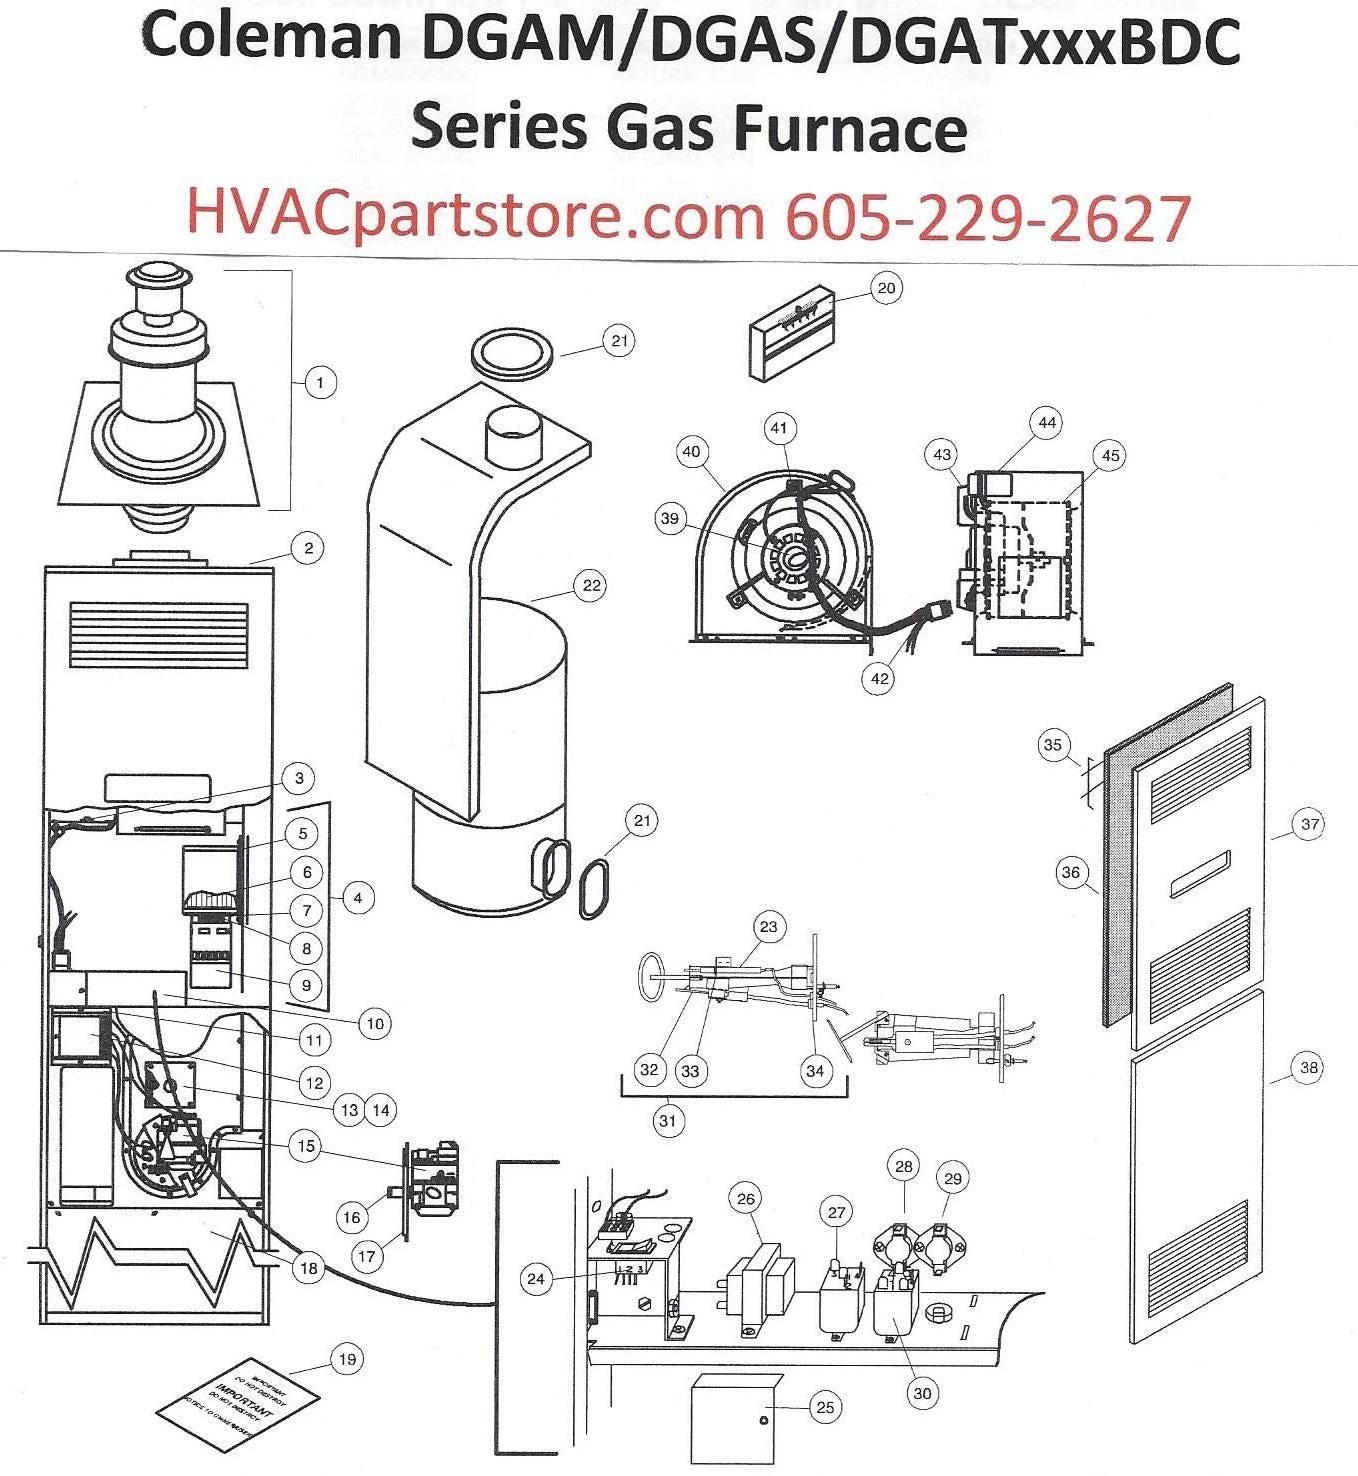 DGAT090BDD Coleman Gas Furnace Parts – HVACpartstore hot air wiring diagram miller 